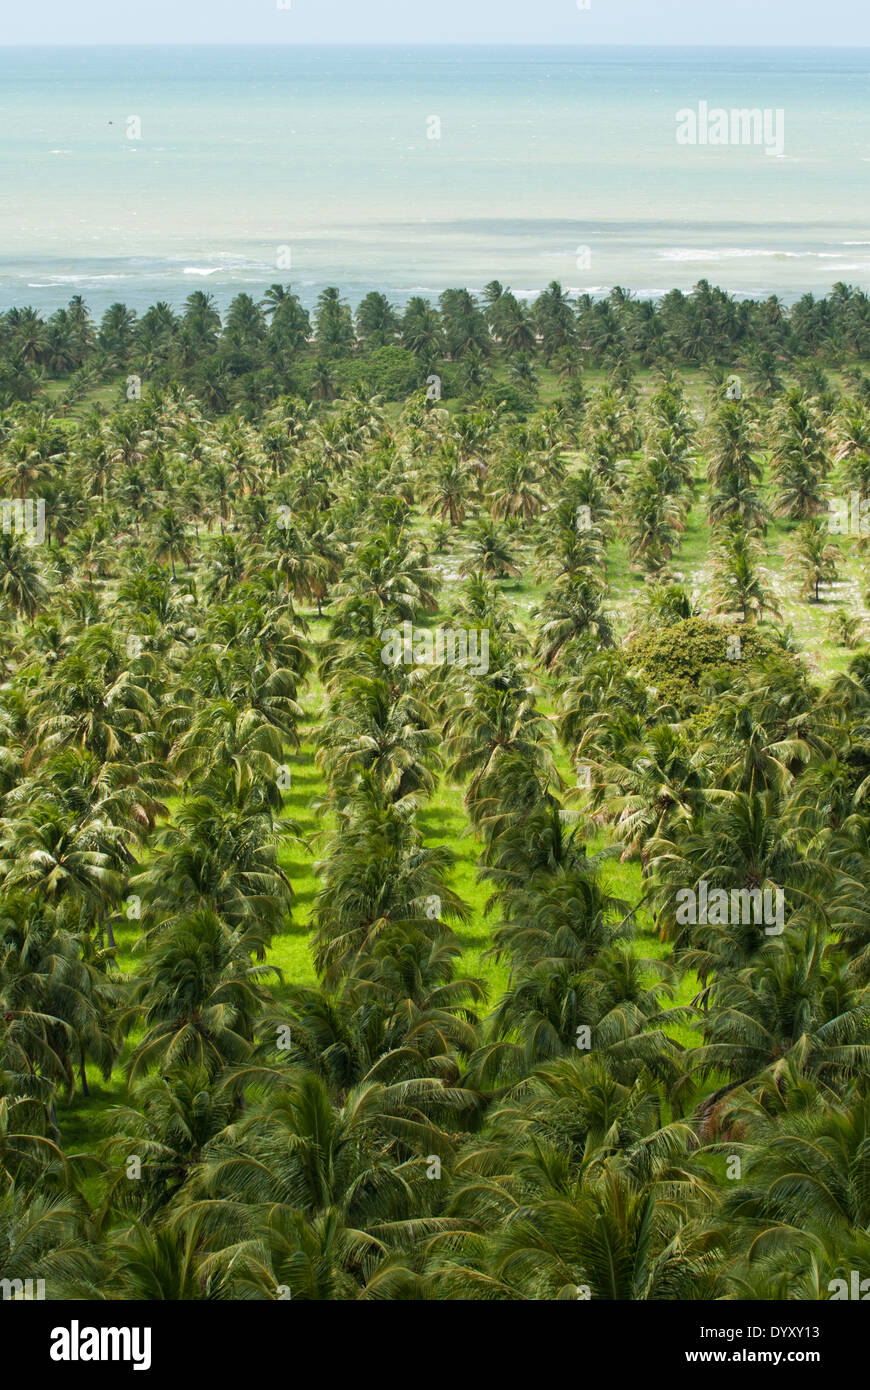 Alagoas State, Brazil. Mirante da Praia do Gunga. Commercial coconut palm plantations by the sea, high view. Stock Photo